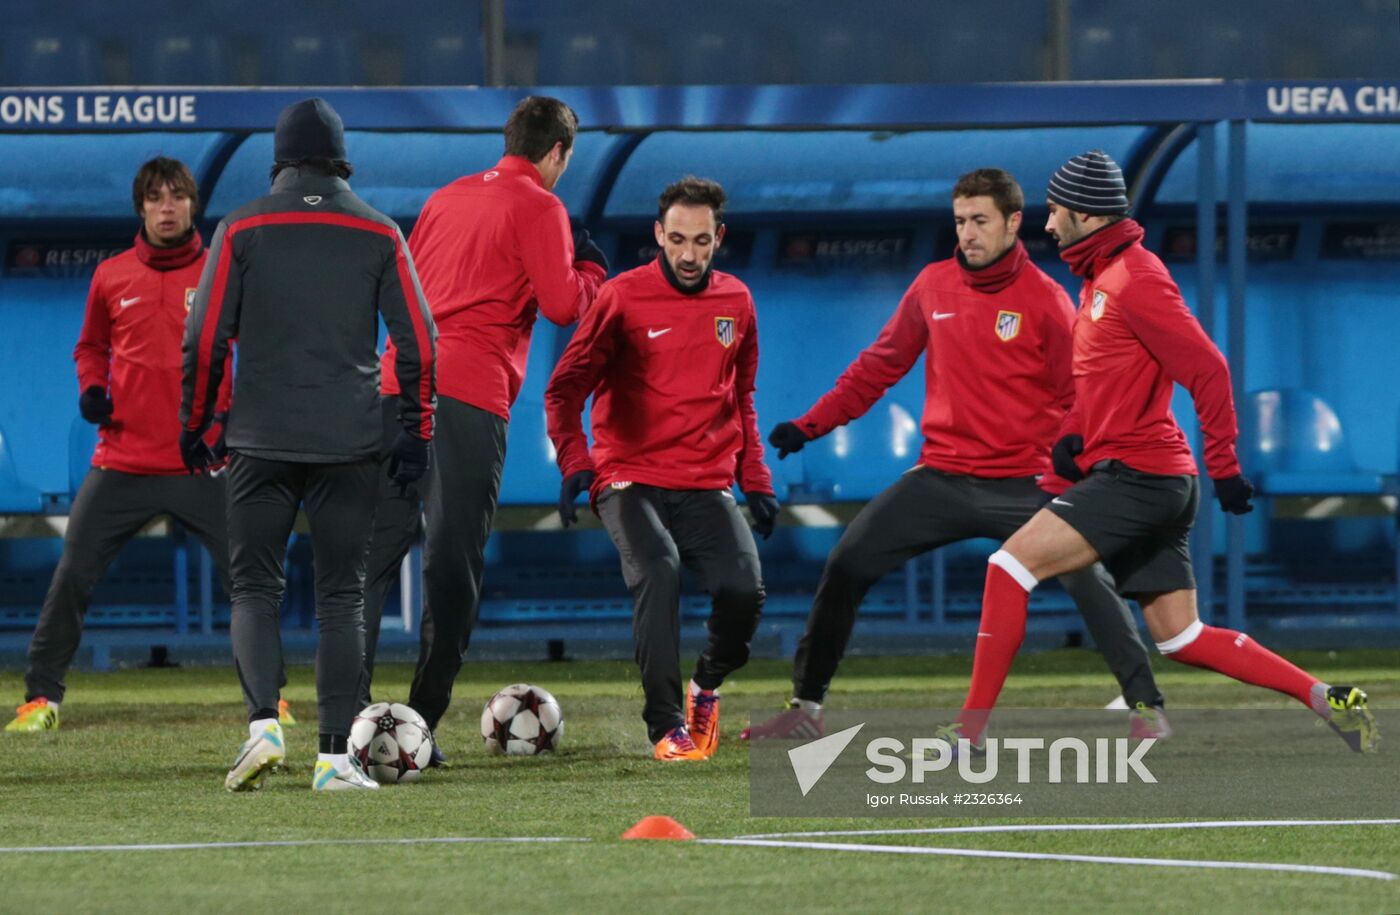 Football. Training session of Atlético de Madrid